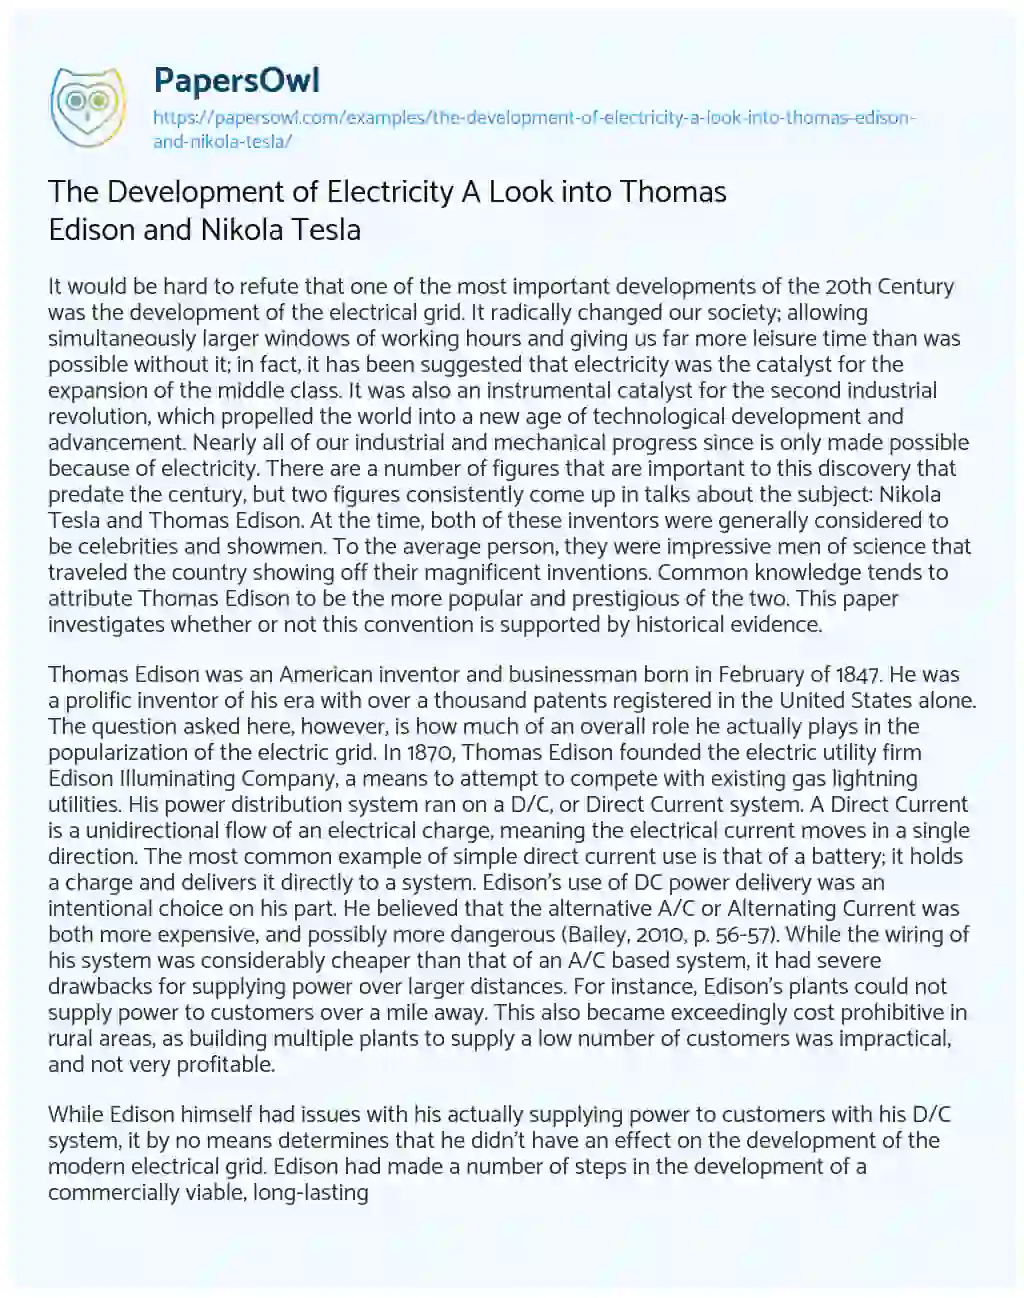 The Development of Electricity a Look into Thomas Edison and Nikola Tesla essay